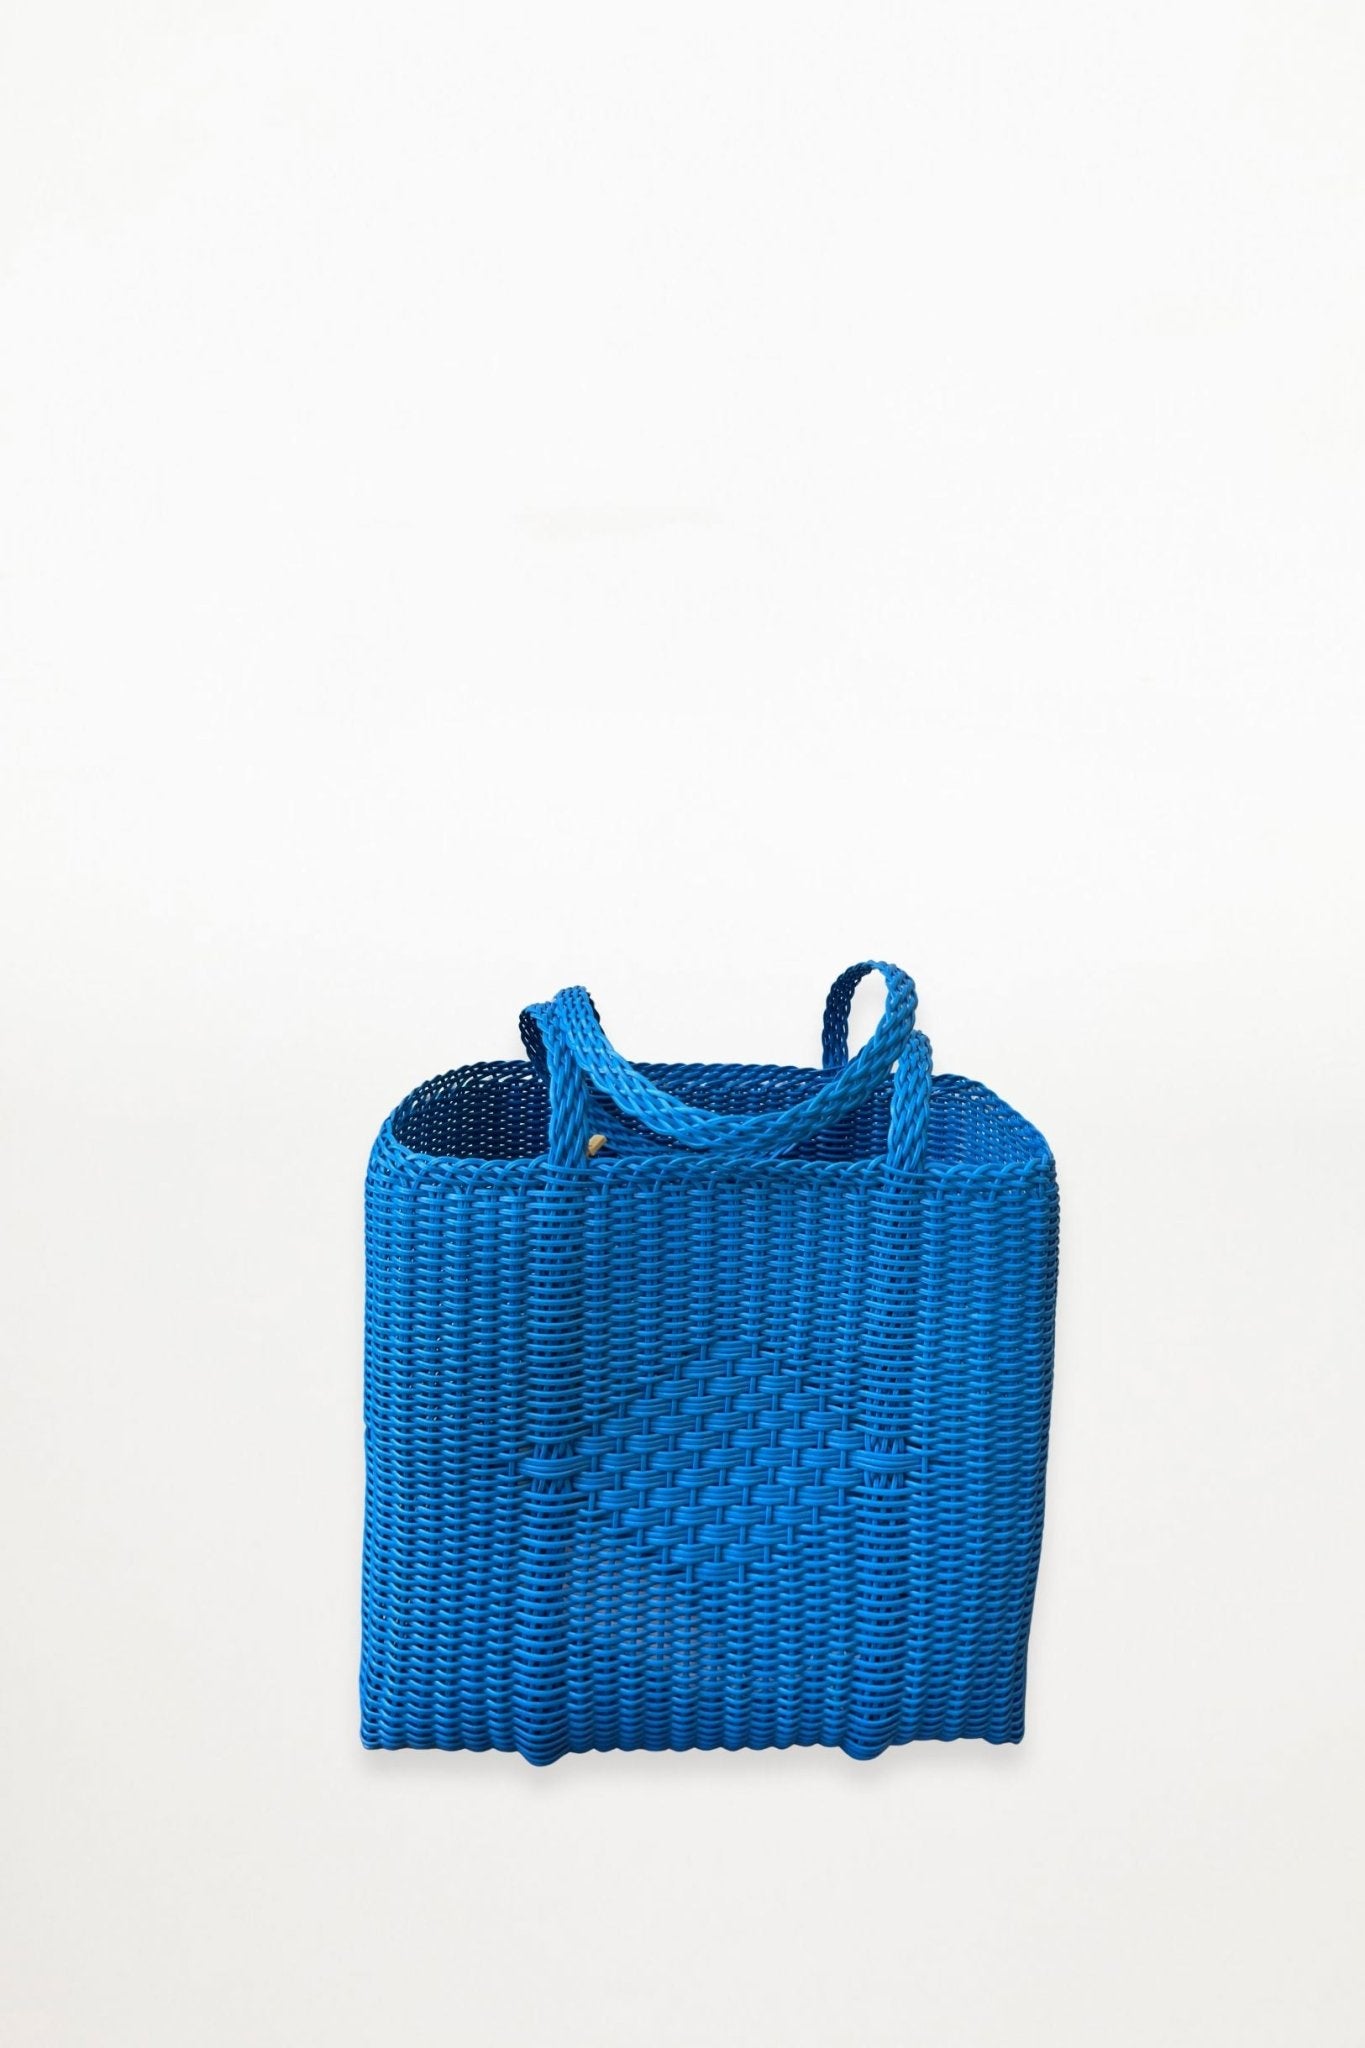 ixöq - Recycled Plastic Cesta Basket Tote Medium - Coast - Ensemble Studios